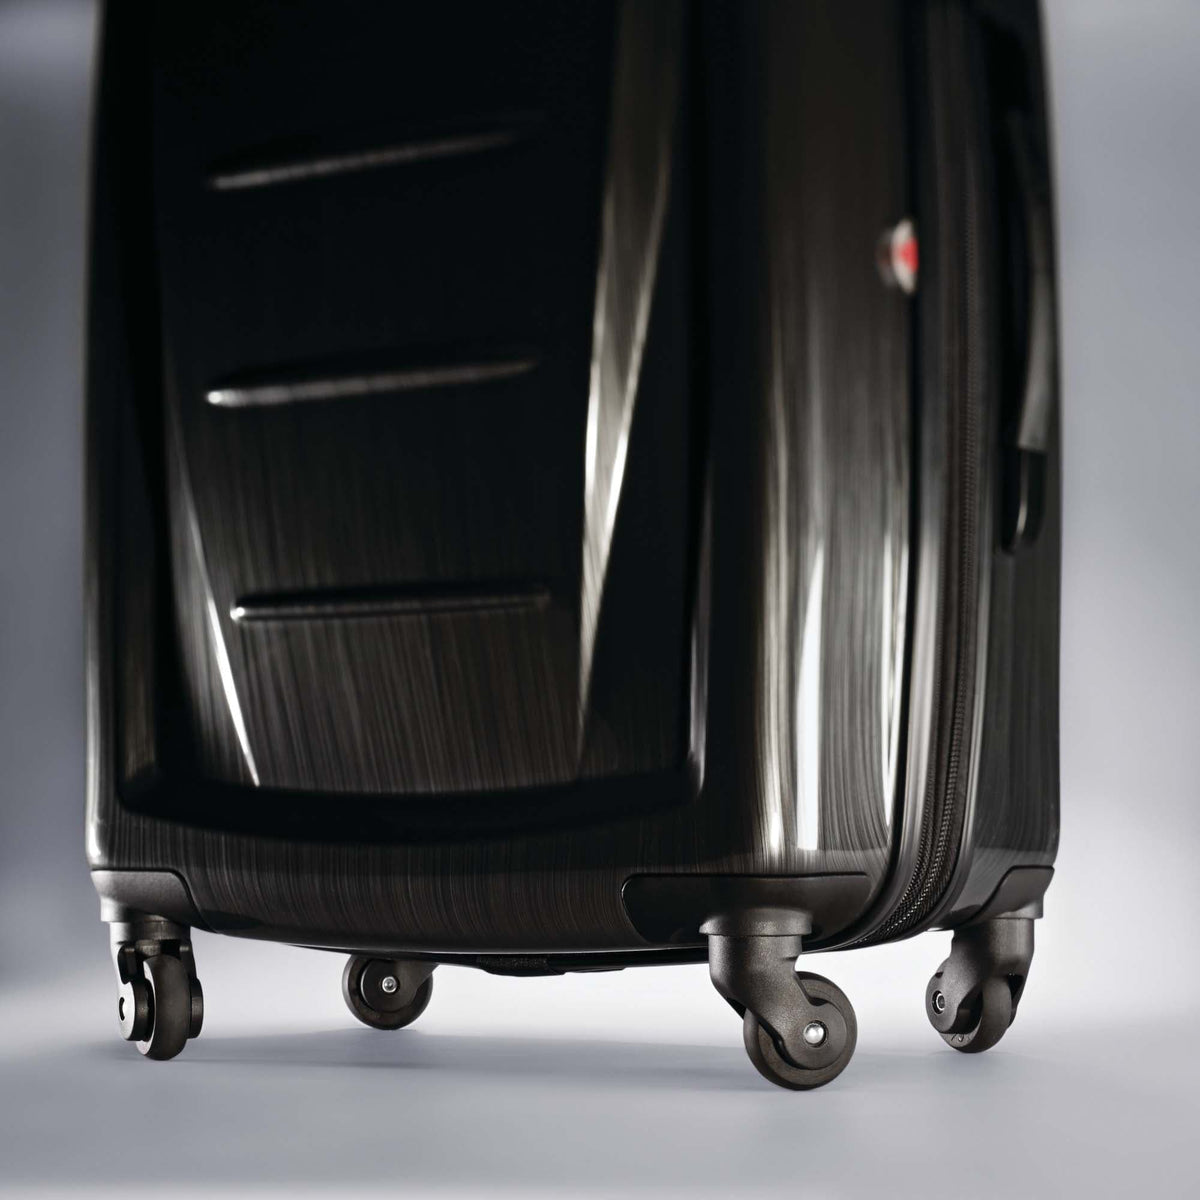 Samsonite Winfield 2 Fashion 3 Piece Hardside Luggage Set